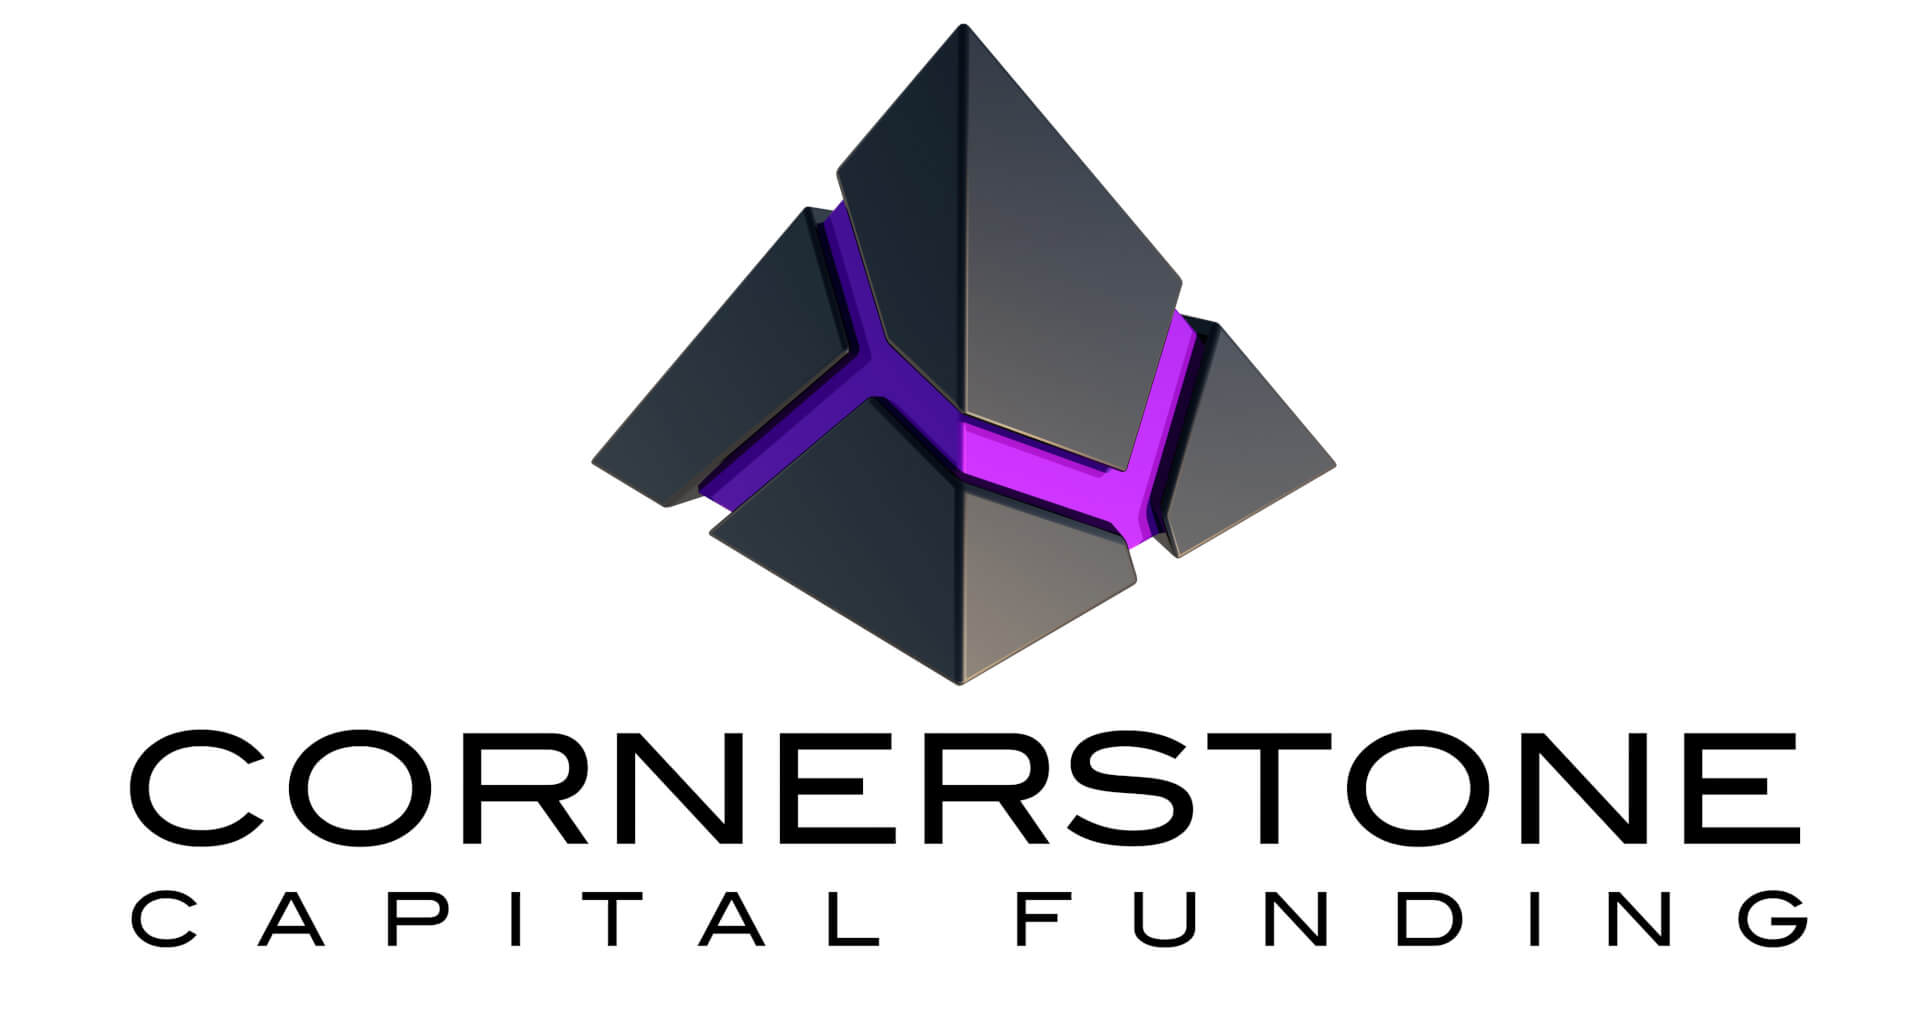 Cornerstone Capital Funding Inc.